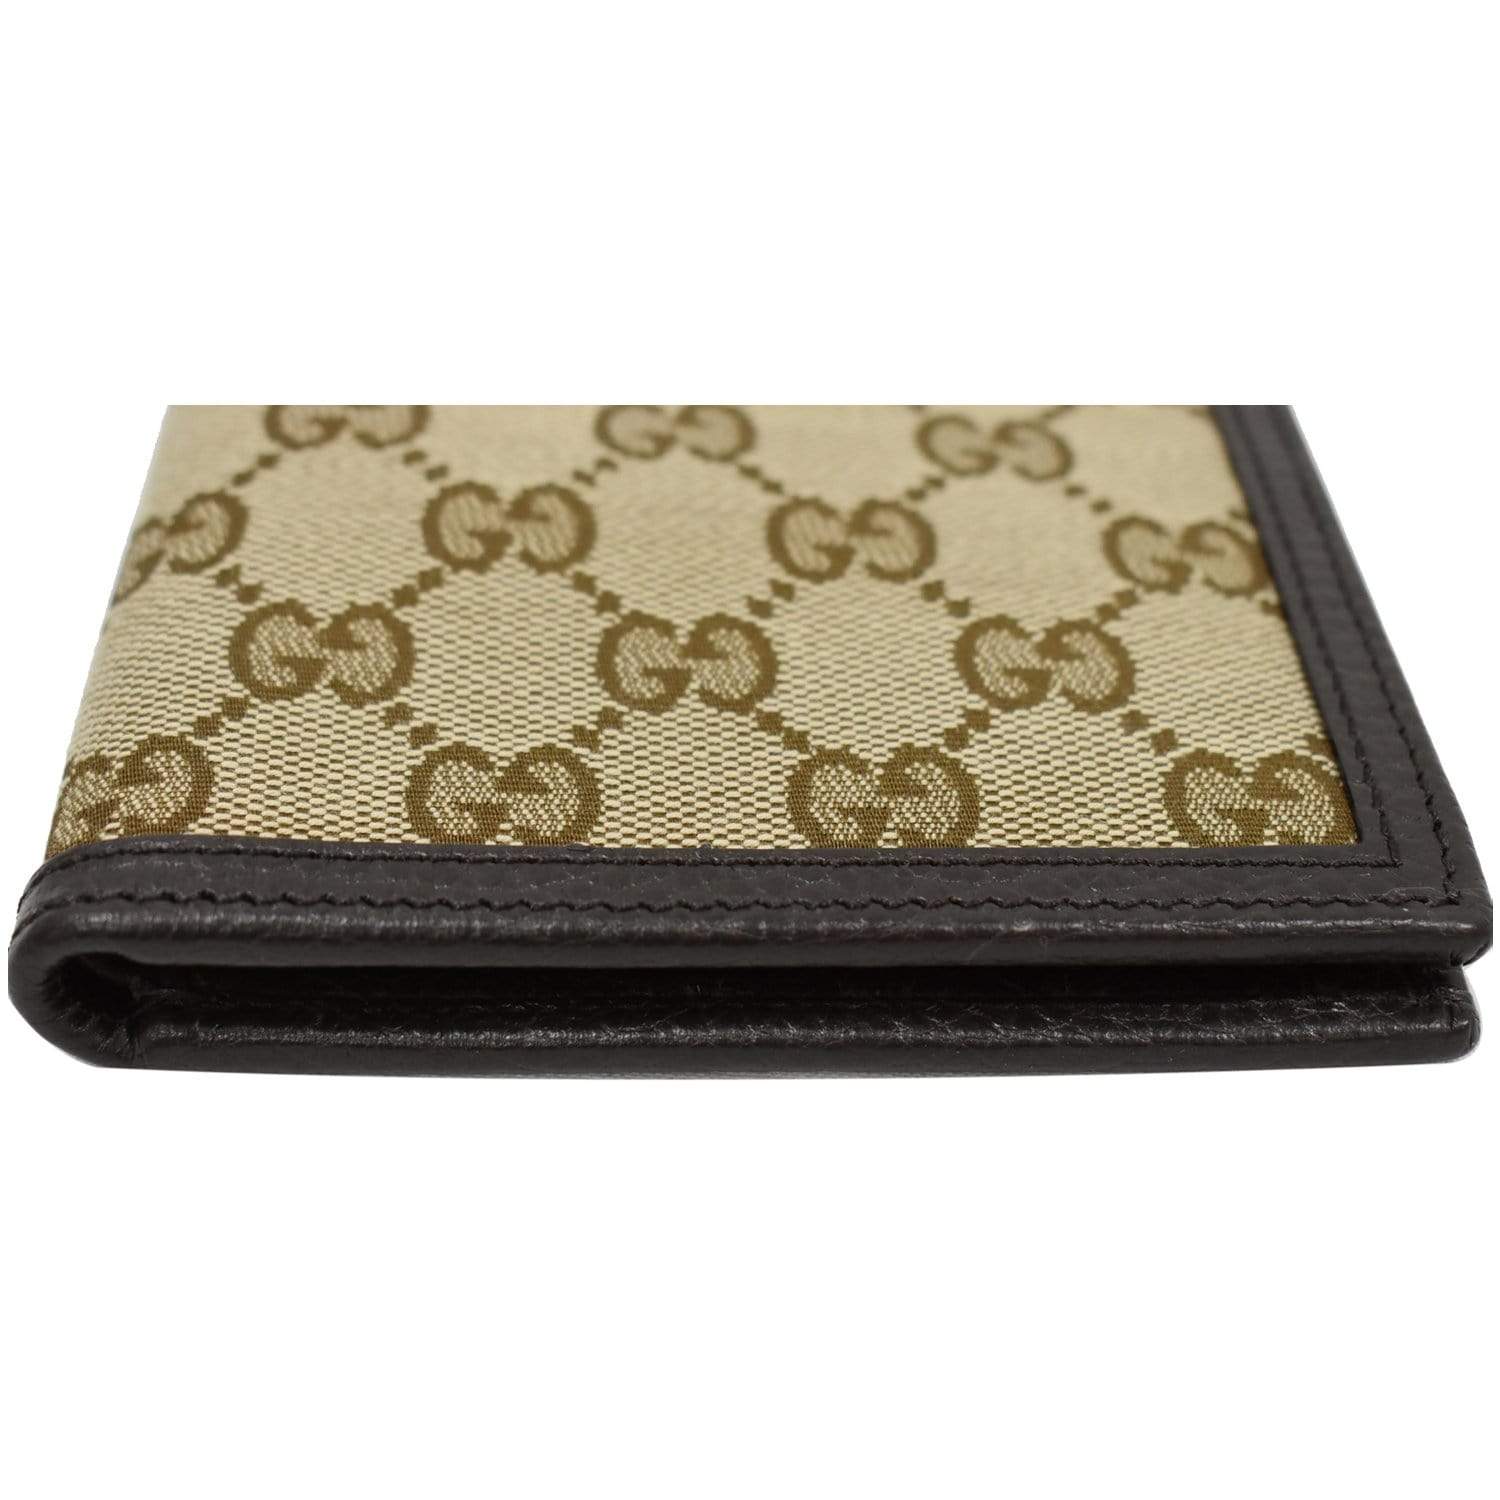 Gucci Original GG Canvas Leather Men's Bifold Wallet 260987 9903 Brown/Beige Box New